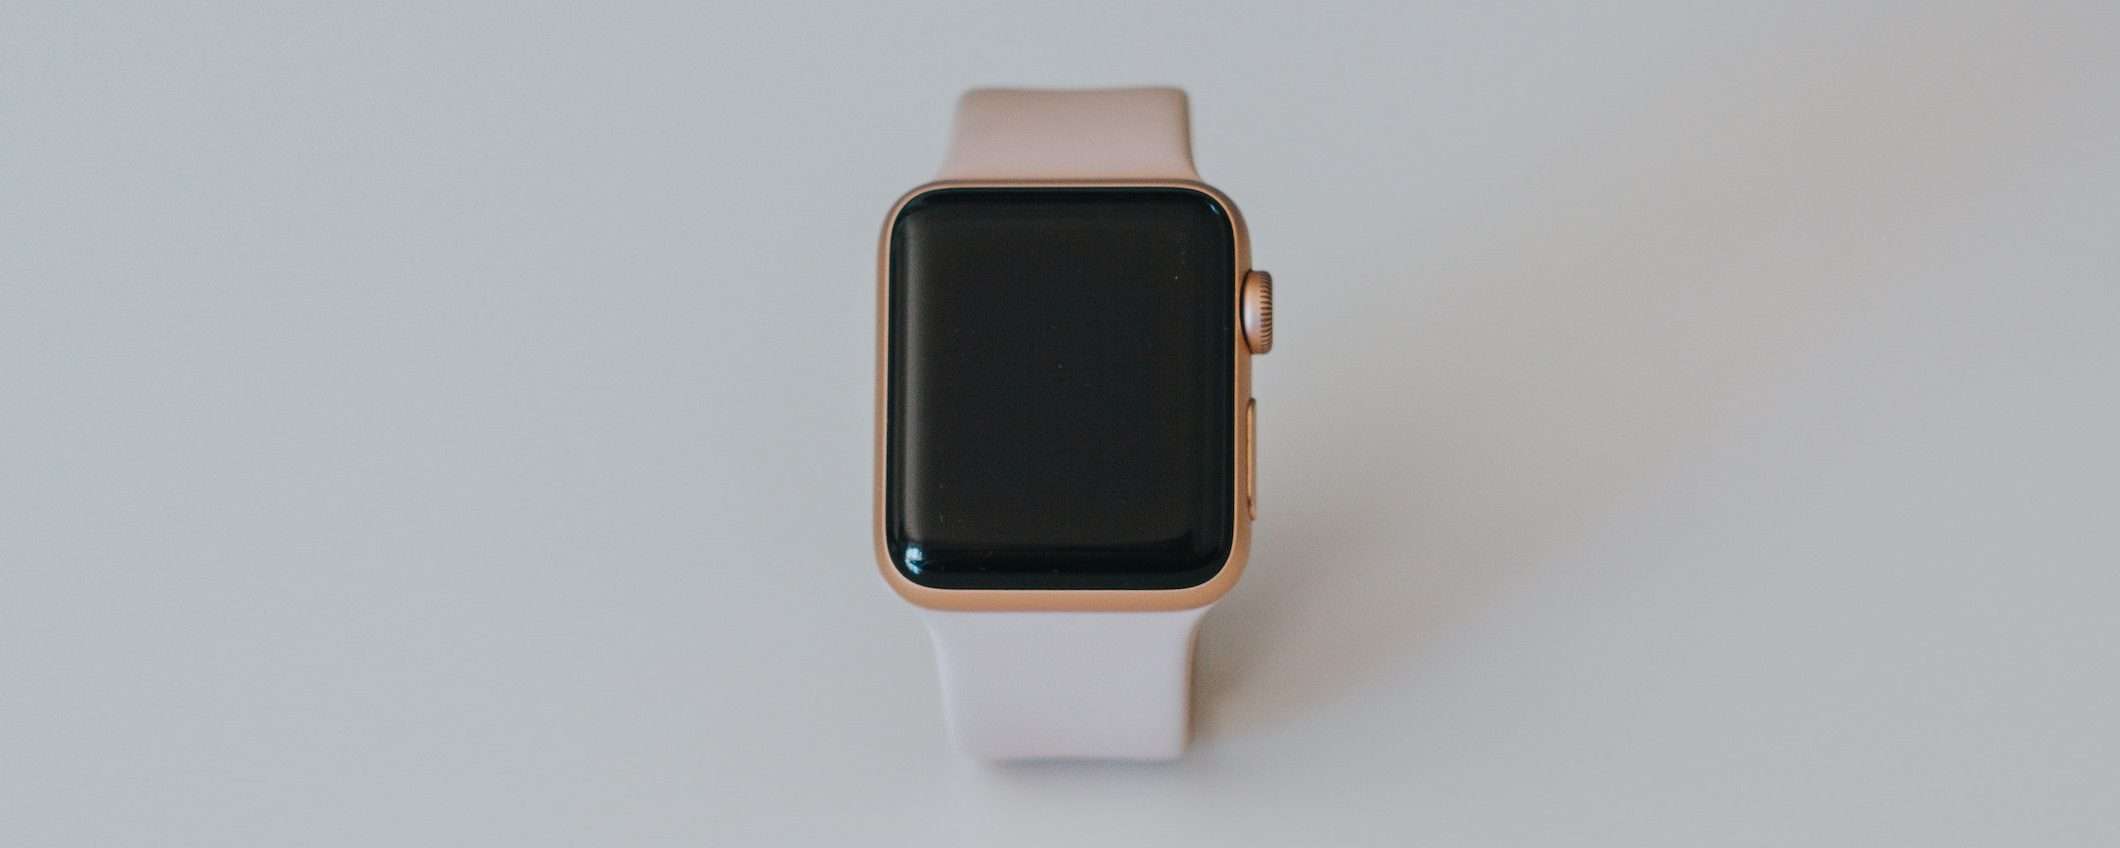 Apple Watch Series 3: prossimo al pensionamento?